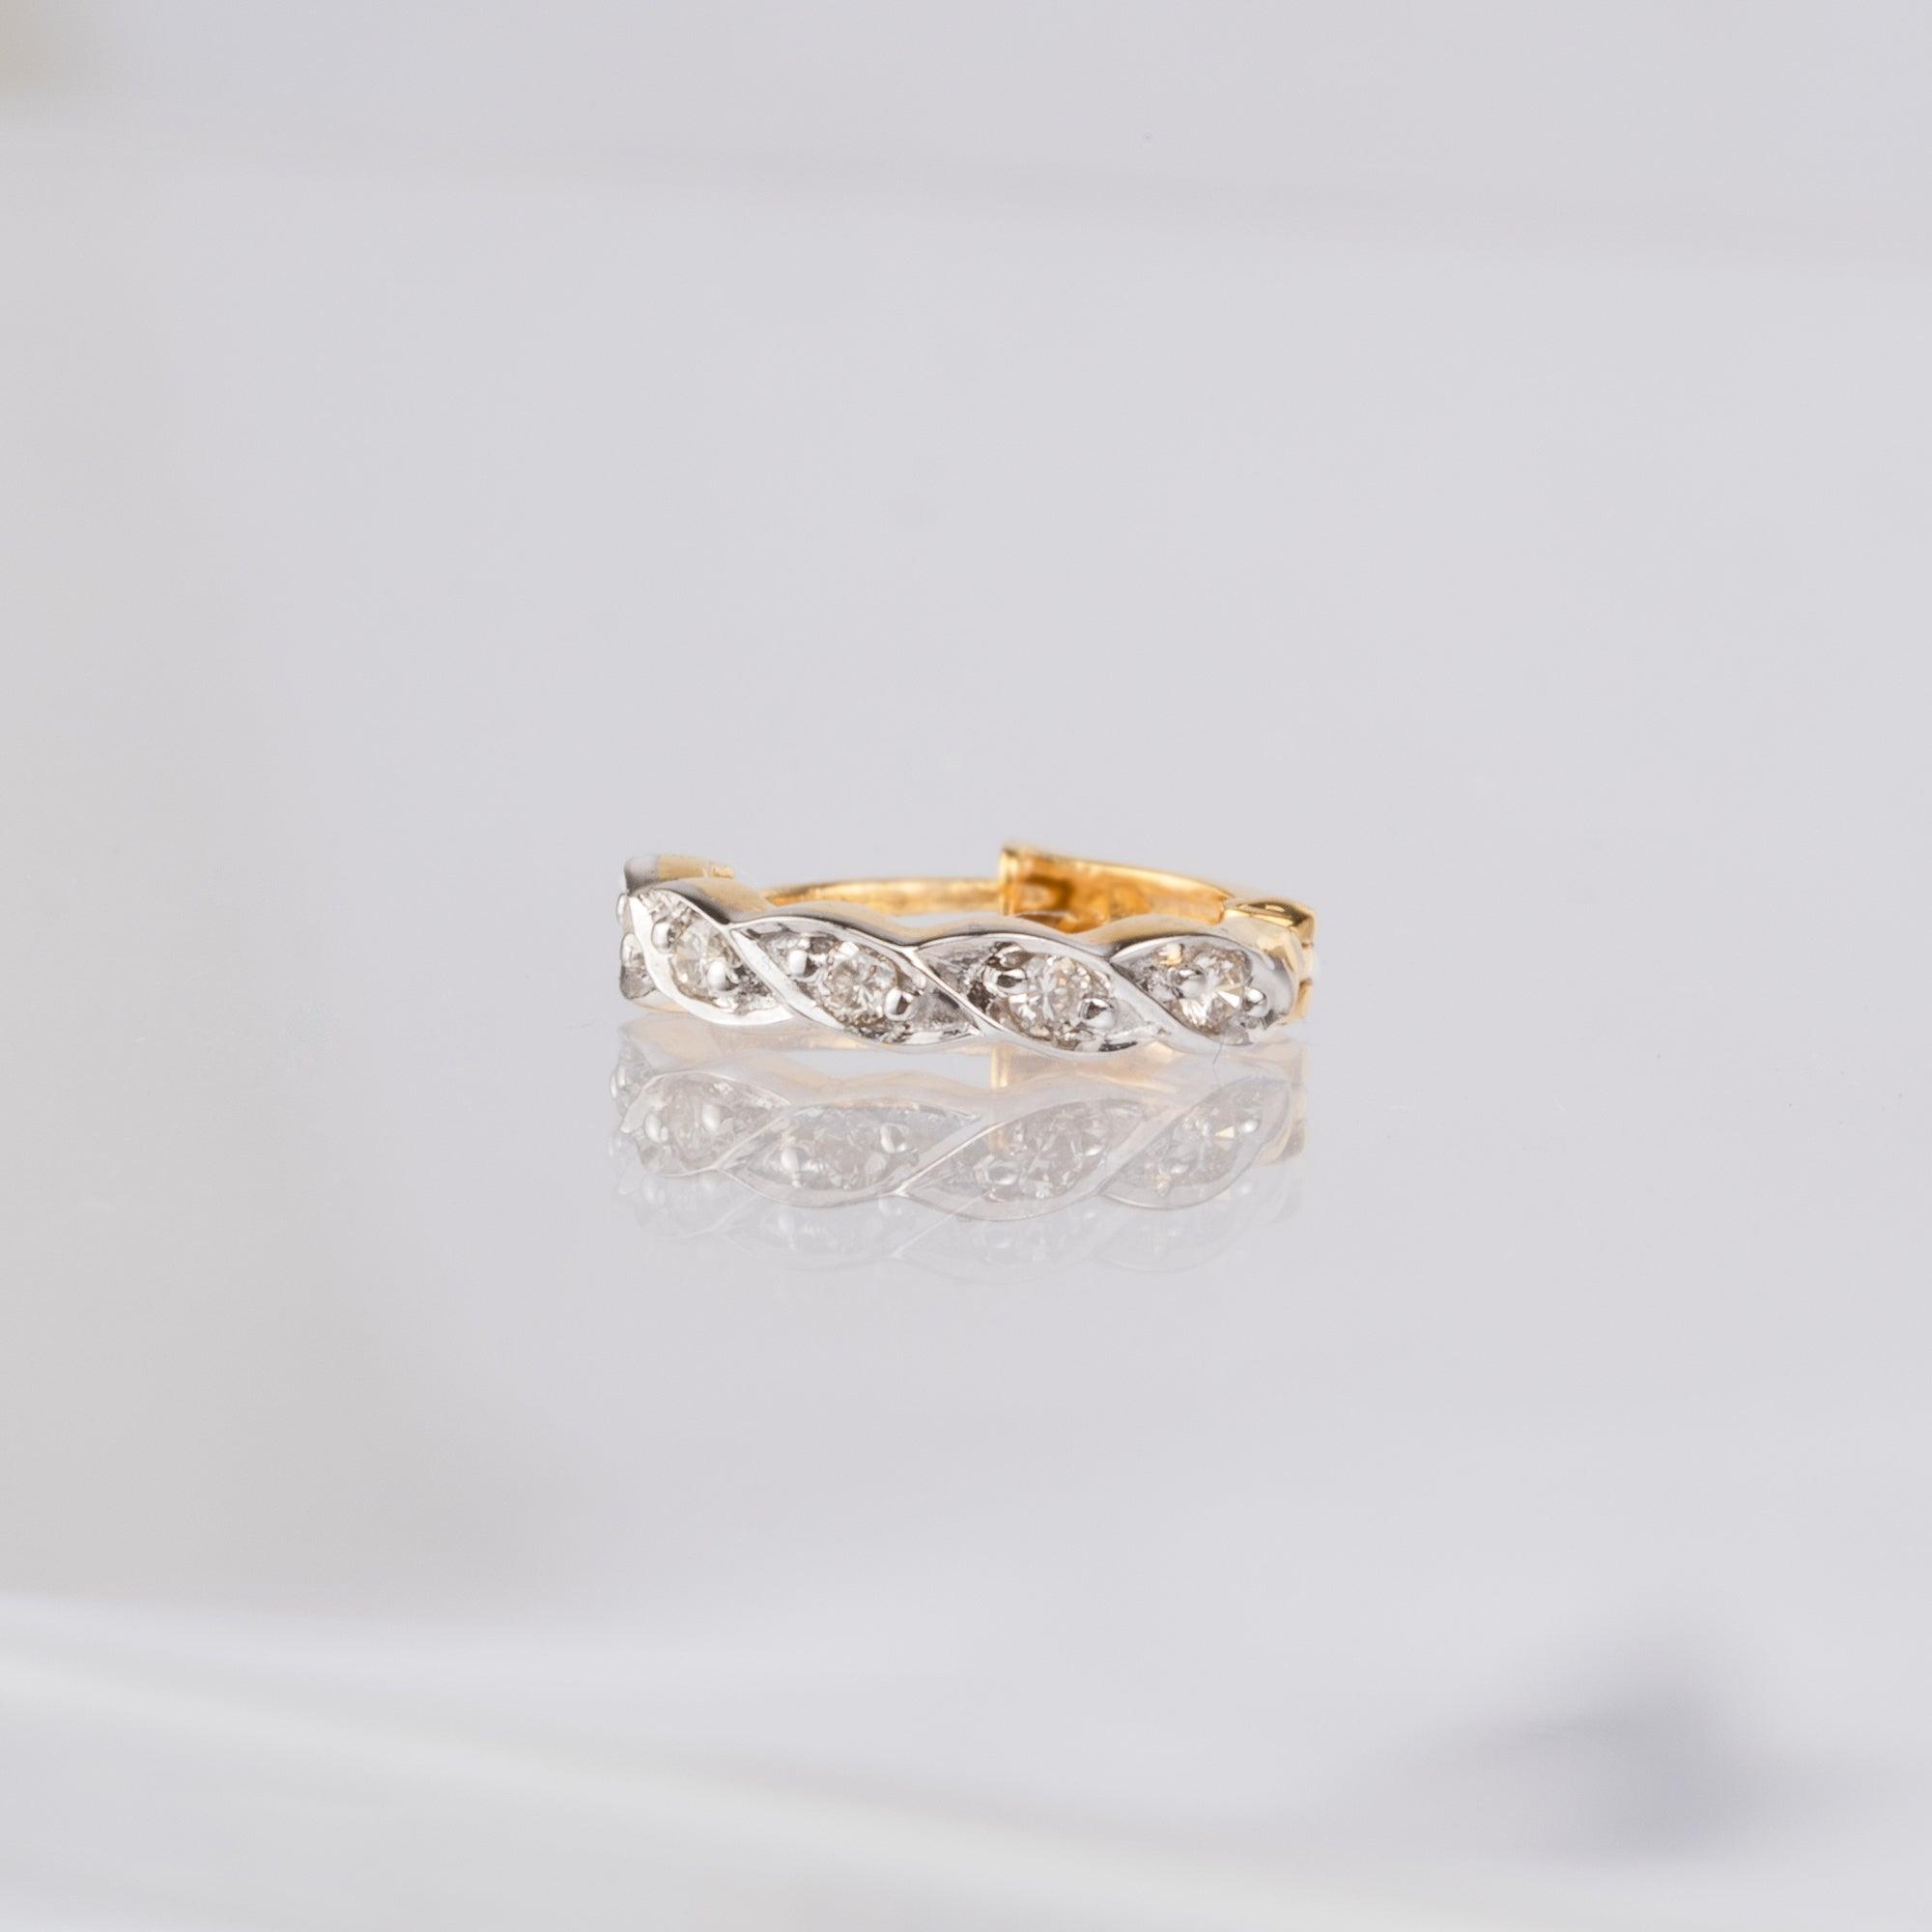 18ct-yellow-gold-diamond-nose-ring-7.5mm